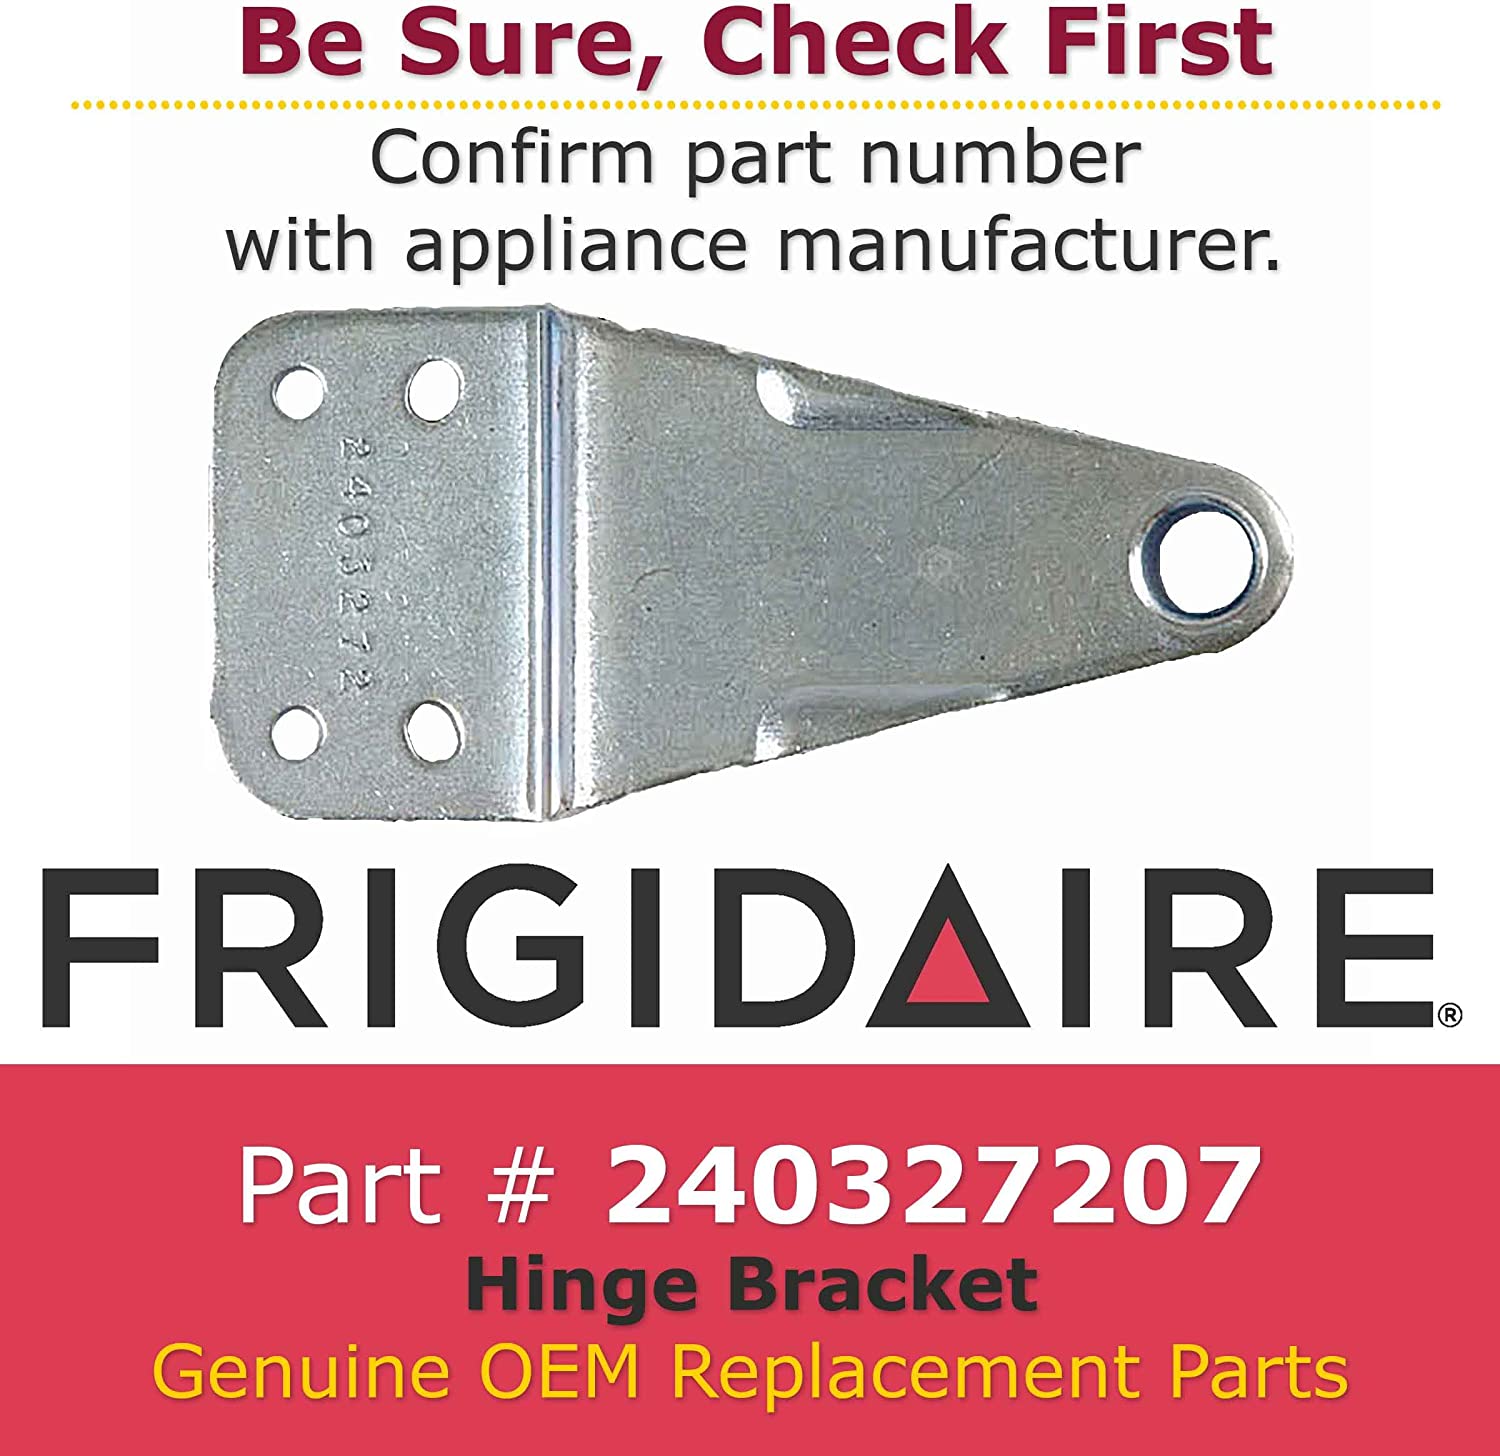 Genuine Frigidaire 240327207 Refrigerator Top Hinge - image 2 of 3